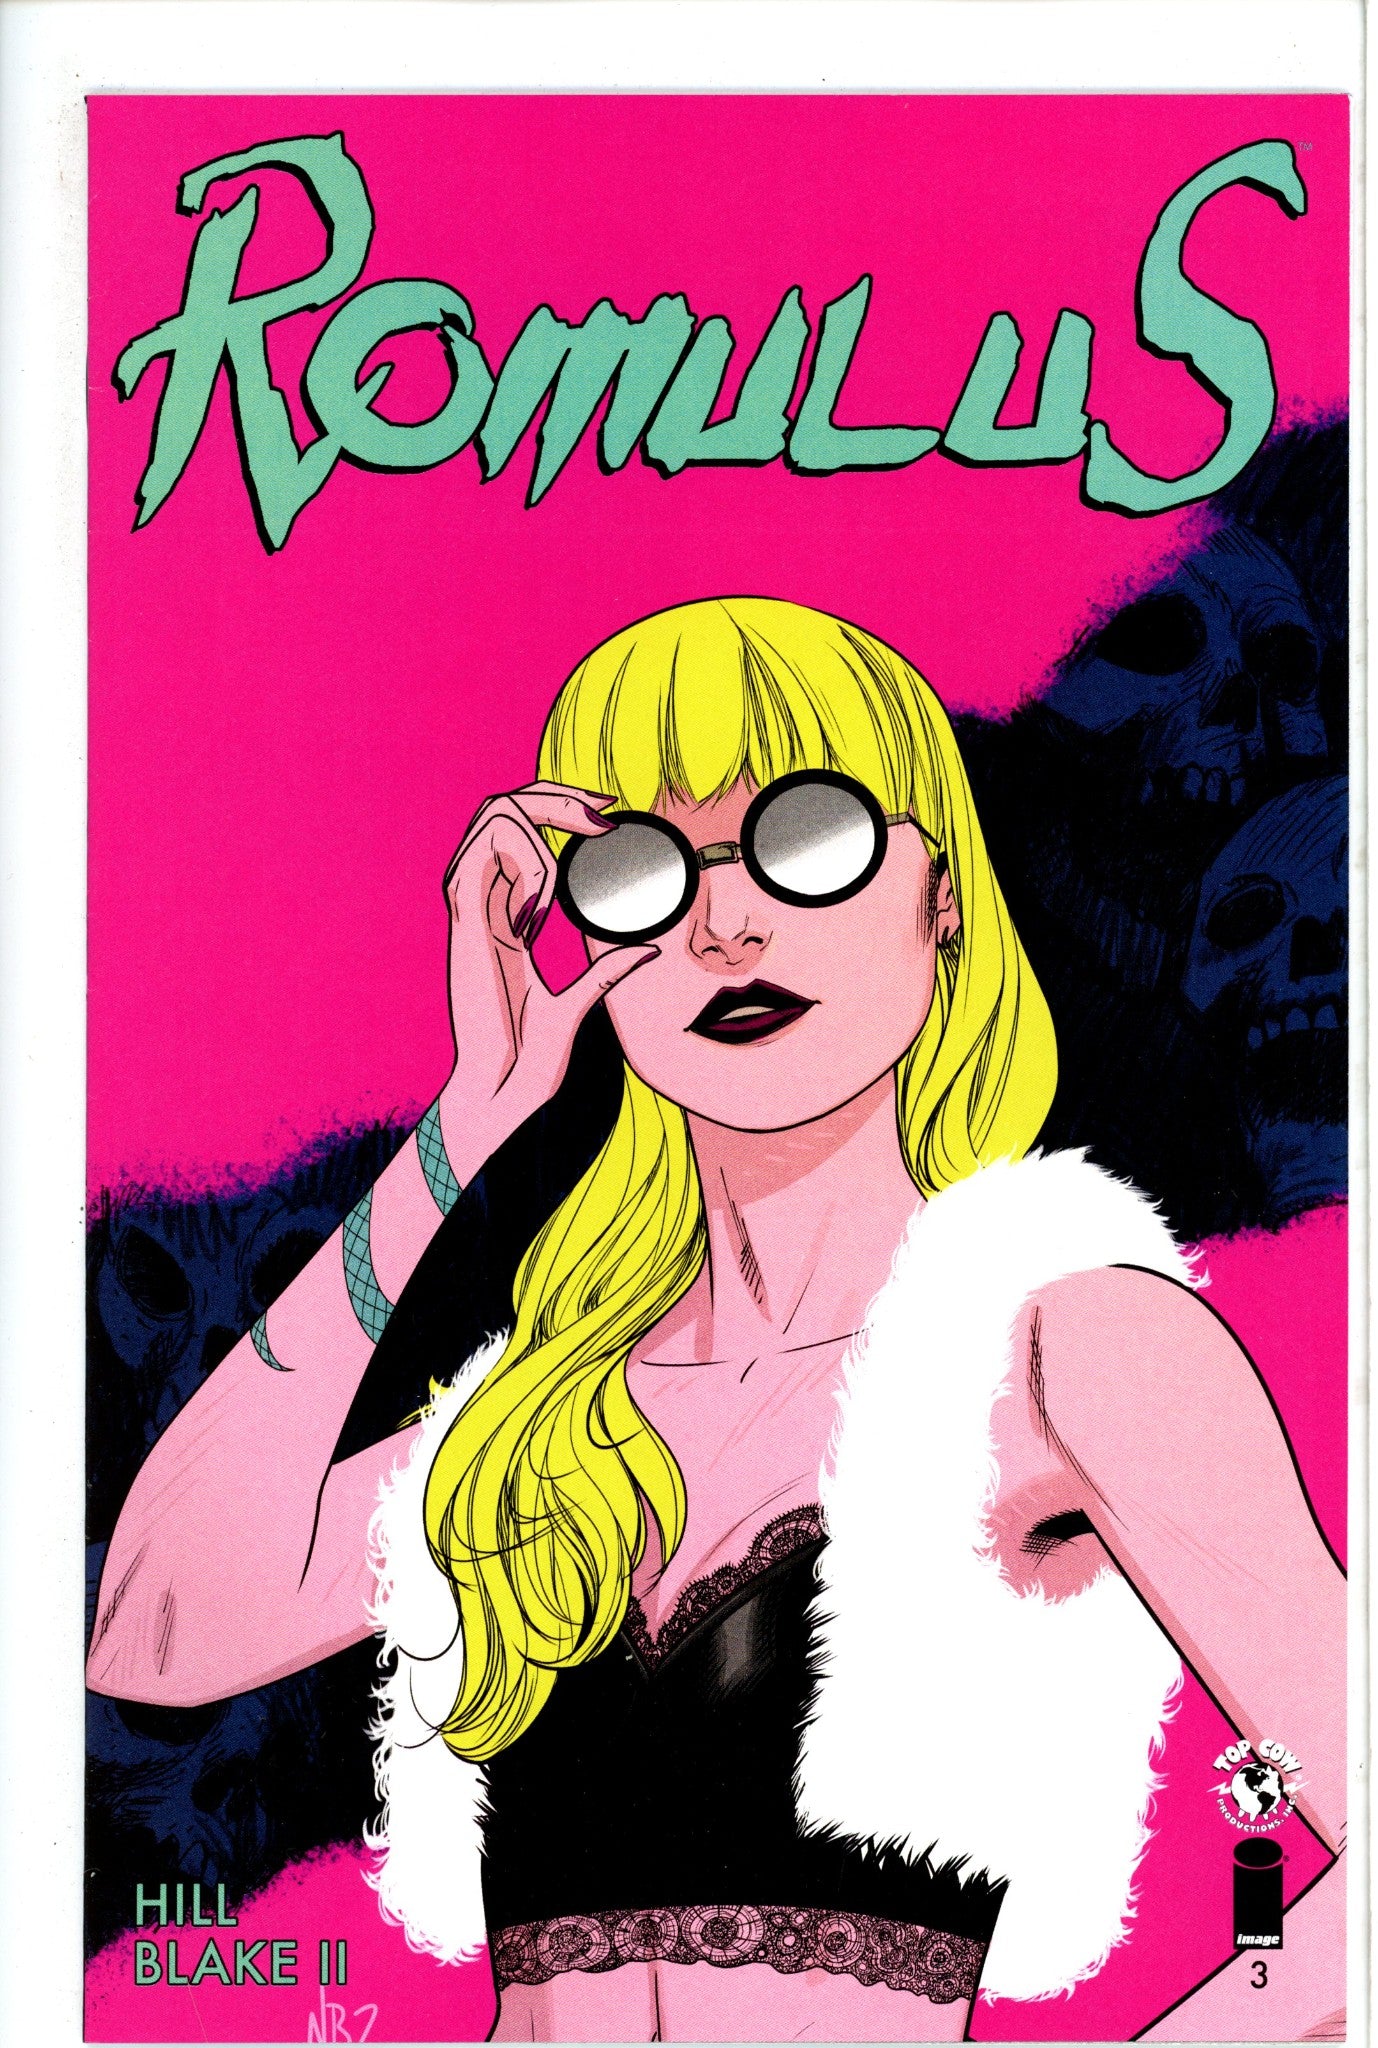 Romulus 3-Image-CaptCan Comics Inc